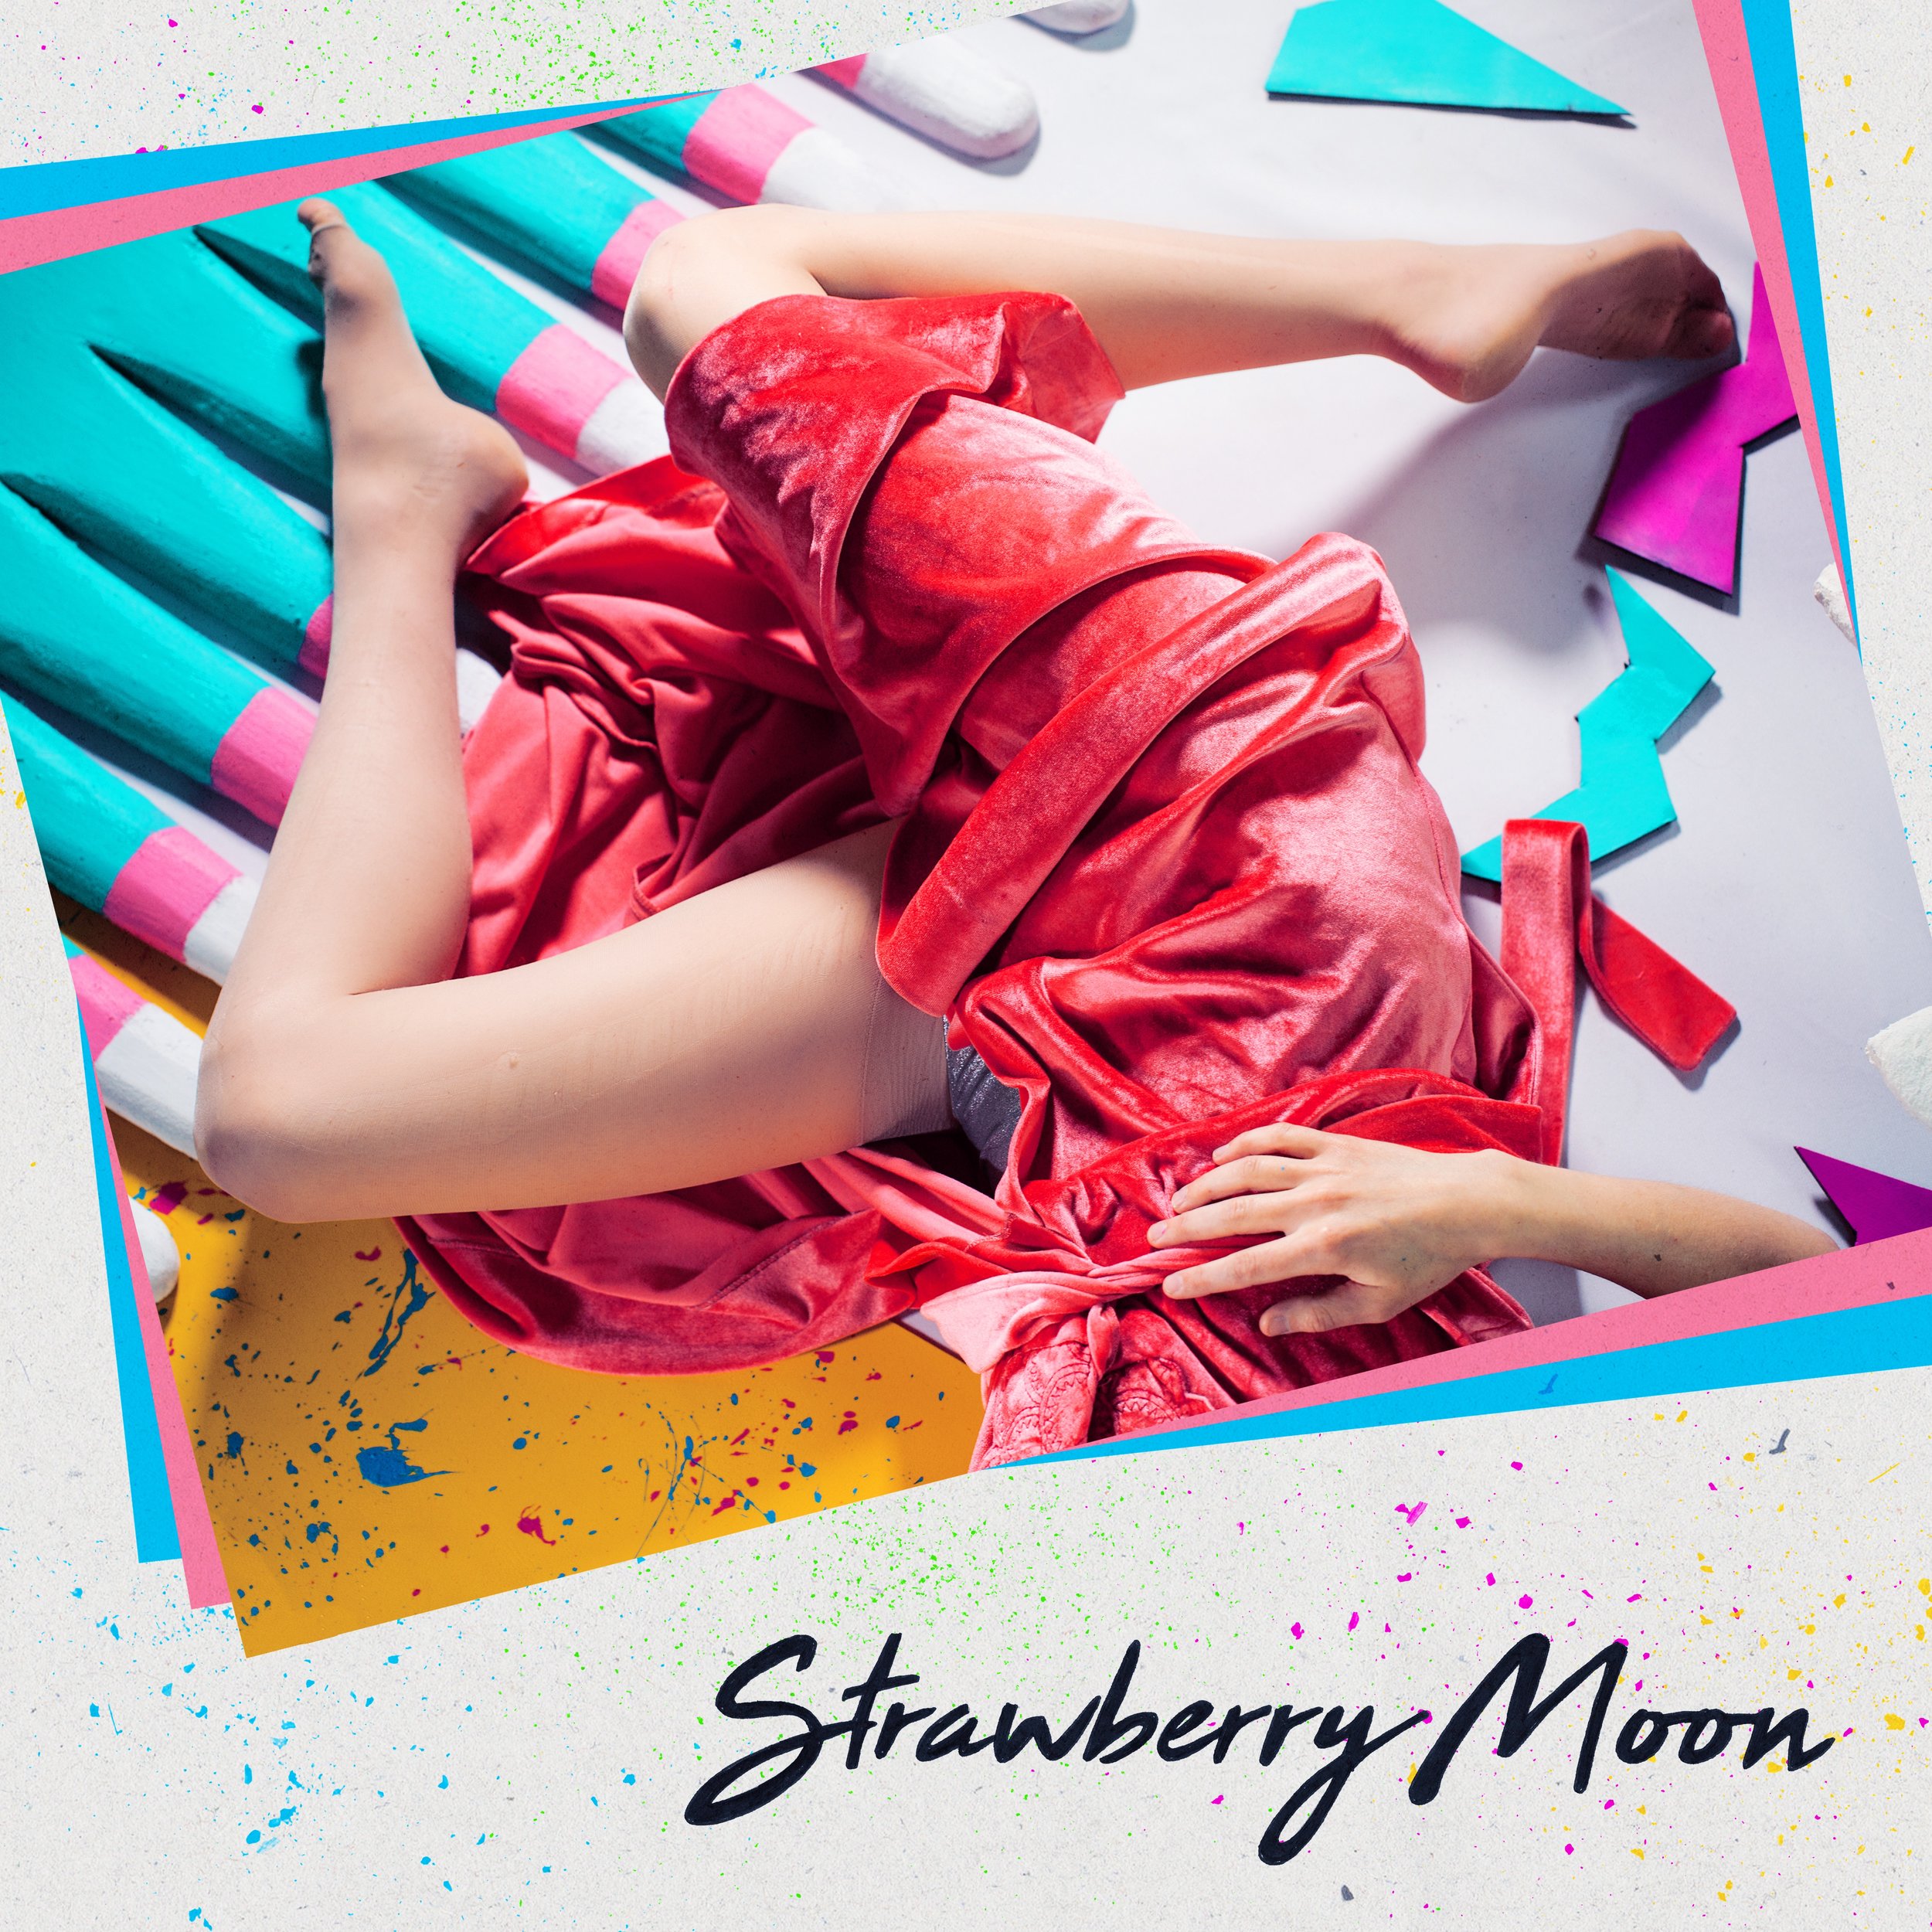 Strawberry Moon — Culvert Music